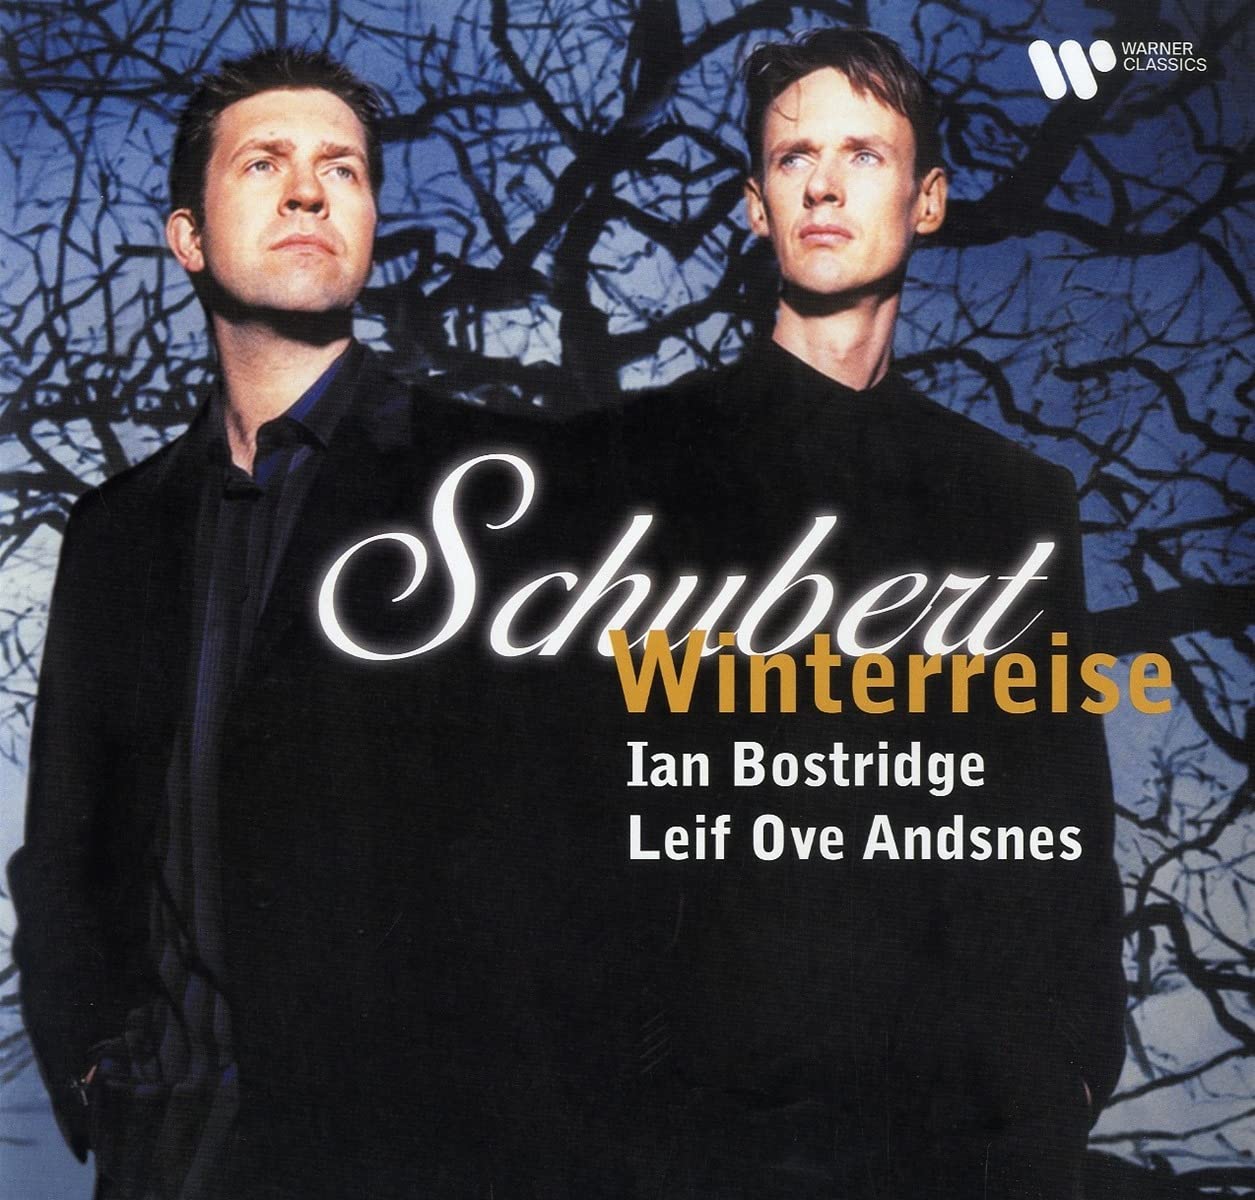 Классика Warner Music Ian Bostridge and Leif Ove Andsnes - Schubert: Winterreise (Black Vinyl 2LP) классика warner music various artists calm classical black vinyl 2lp